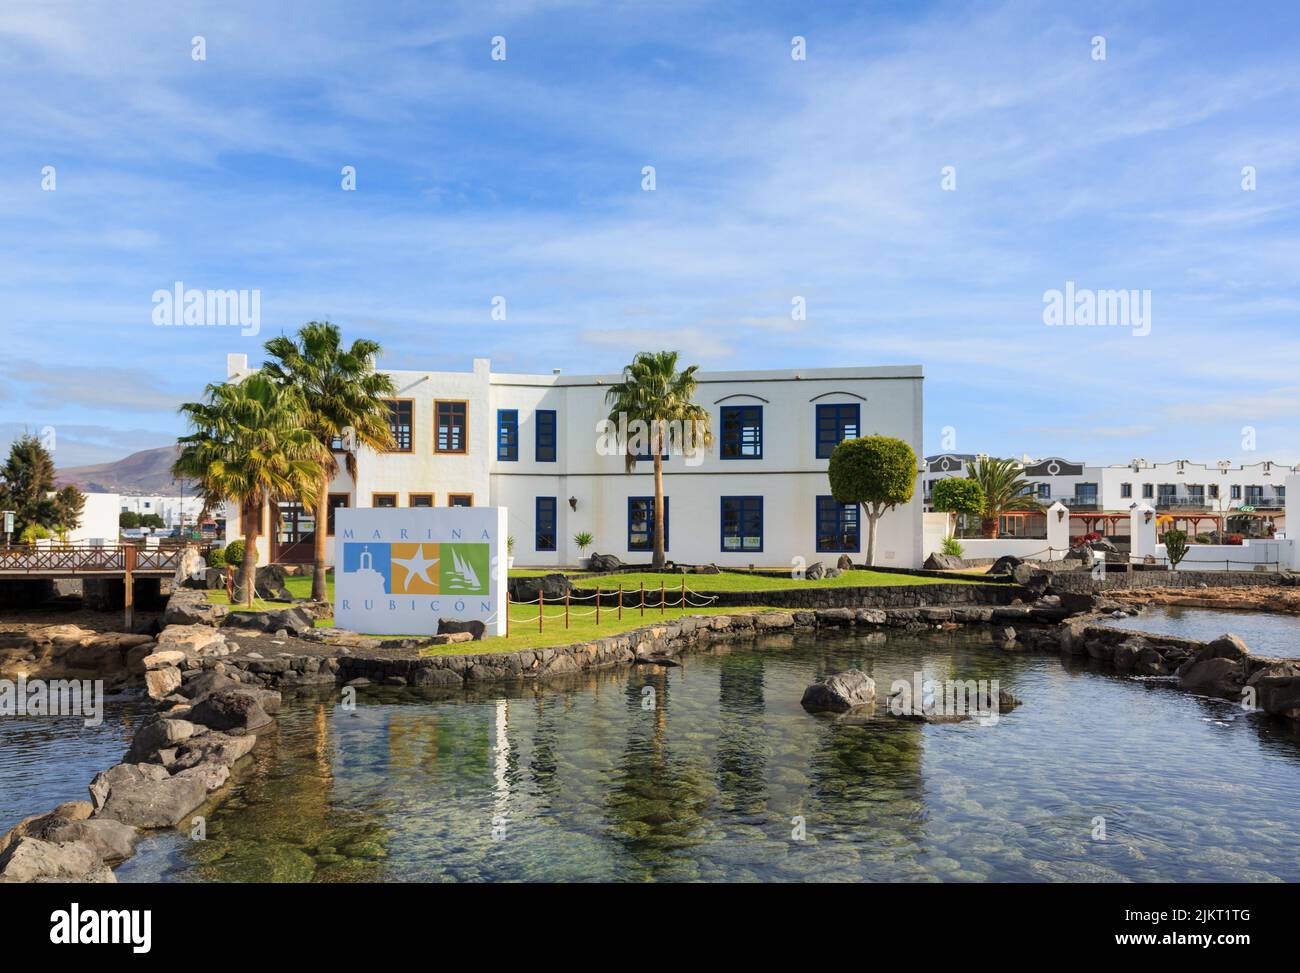 Gardens and sign in coastal resort of Marina Rubicon, Playa Blanca, Lanzarote, Canary Islands, Spain, Europe. Stock Photo